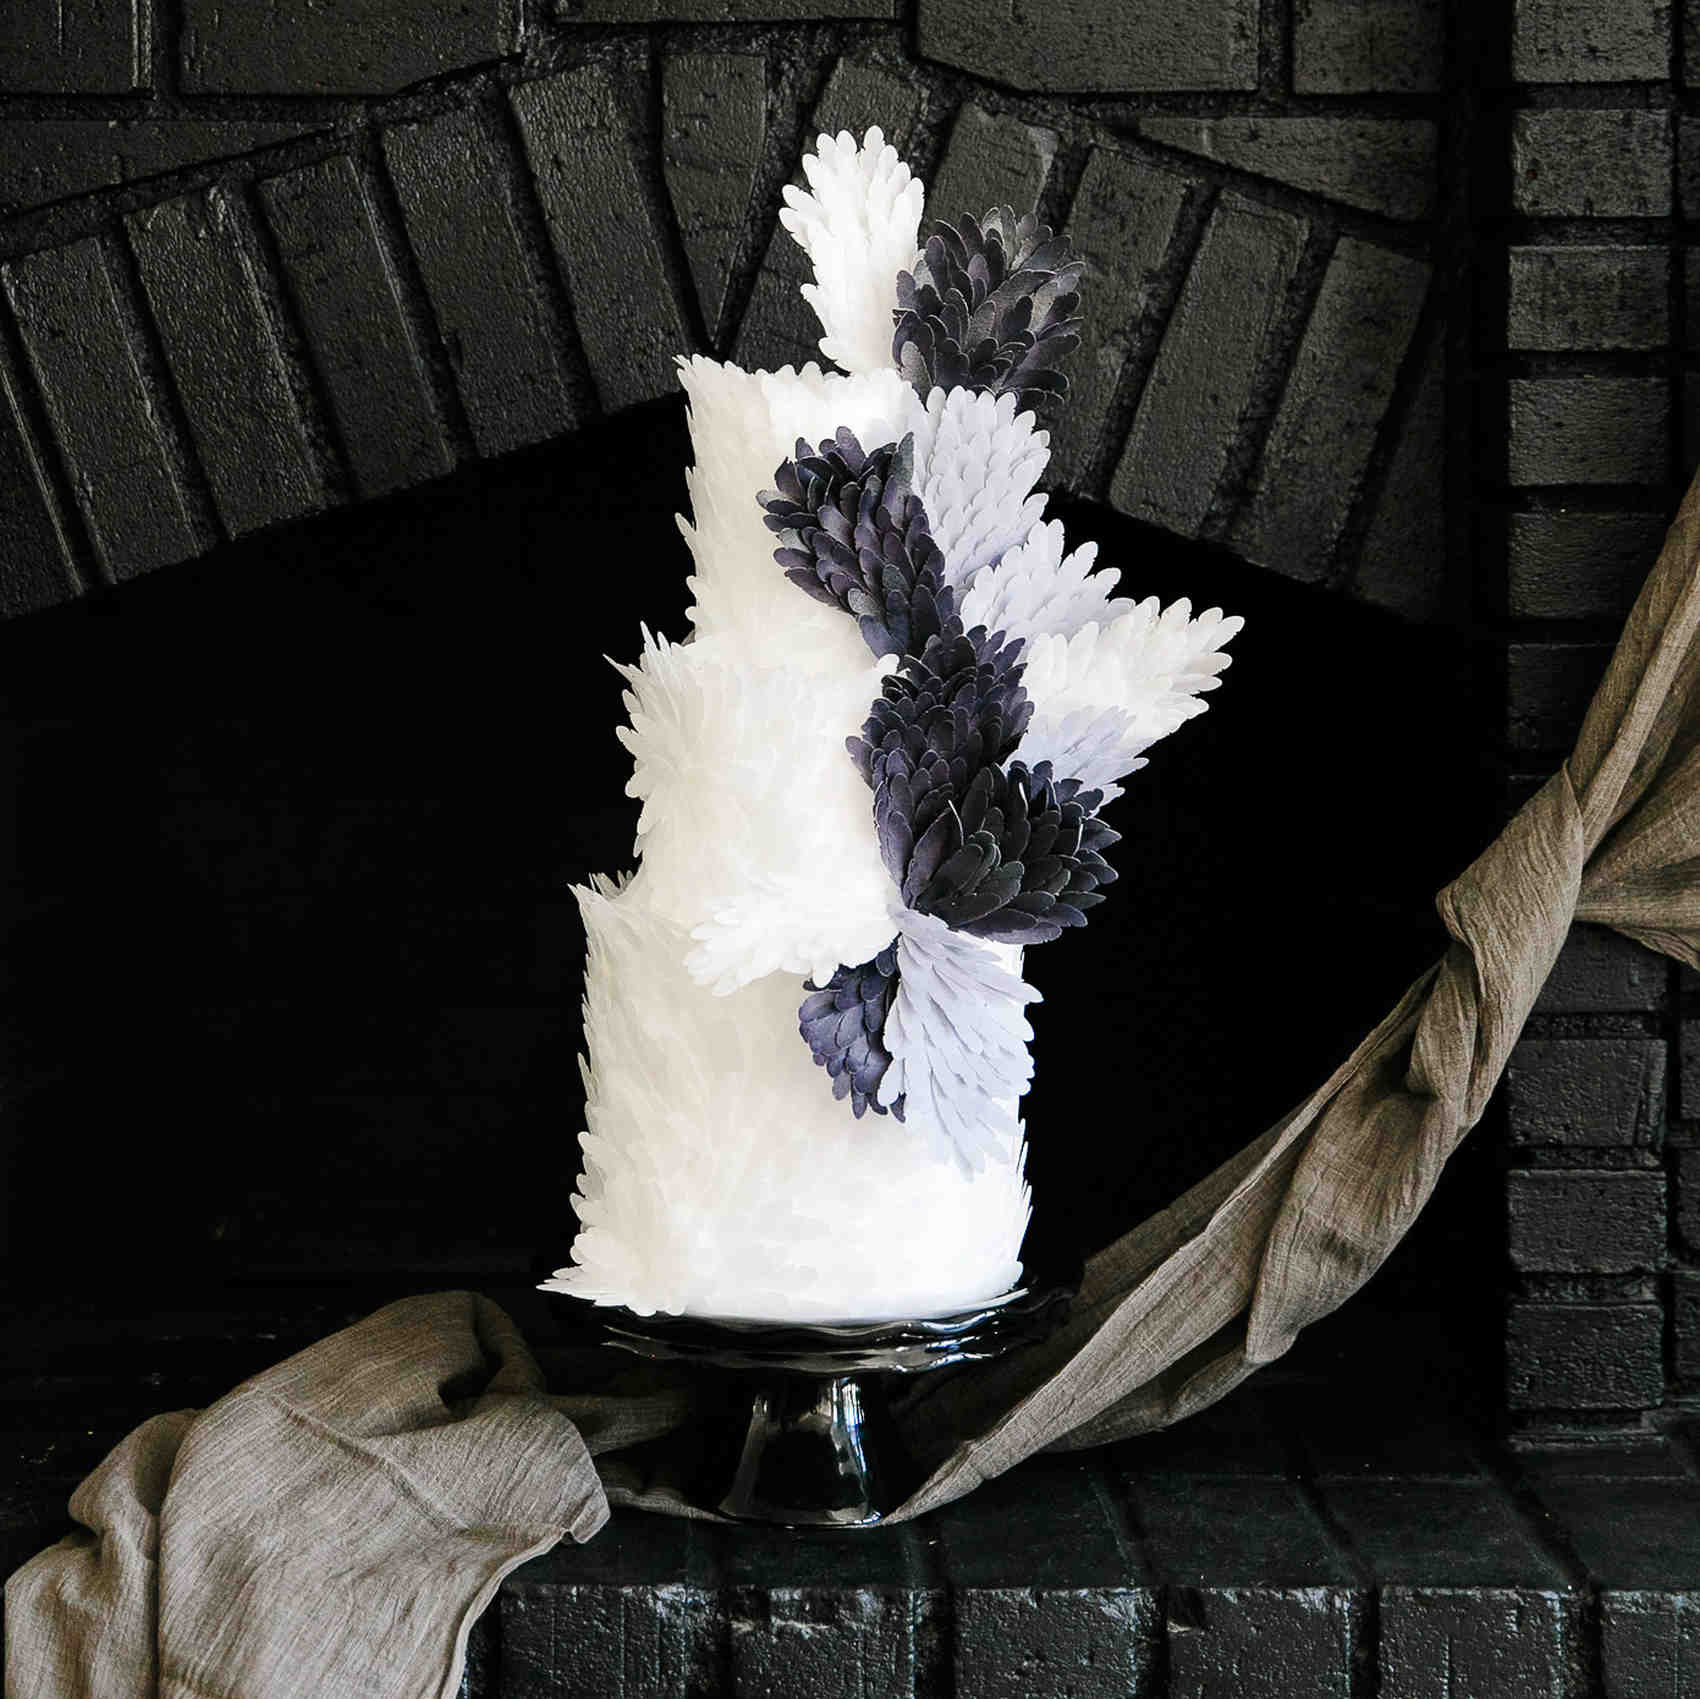 haunted movie house black brick fireplace with cake display